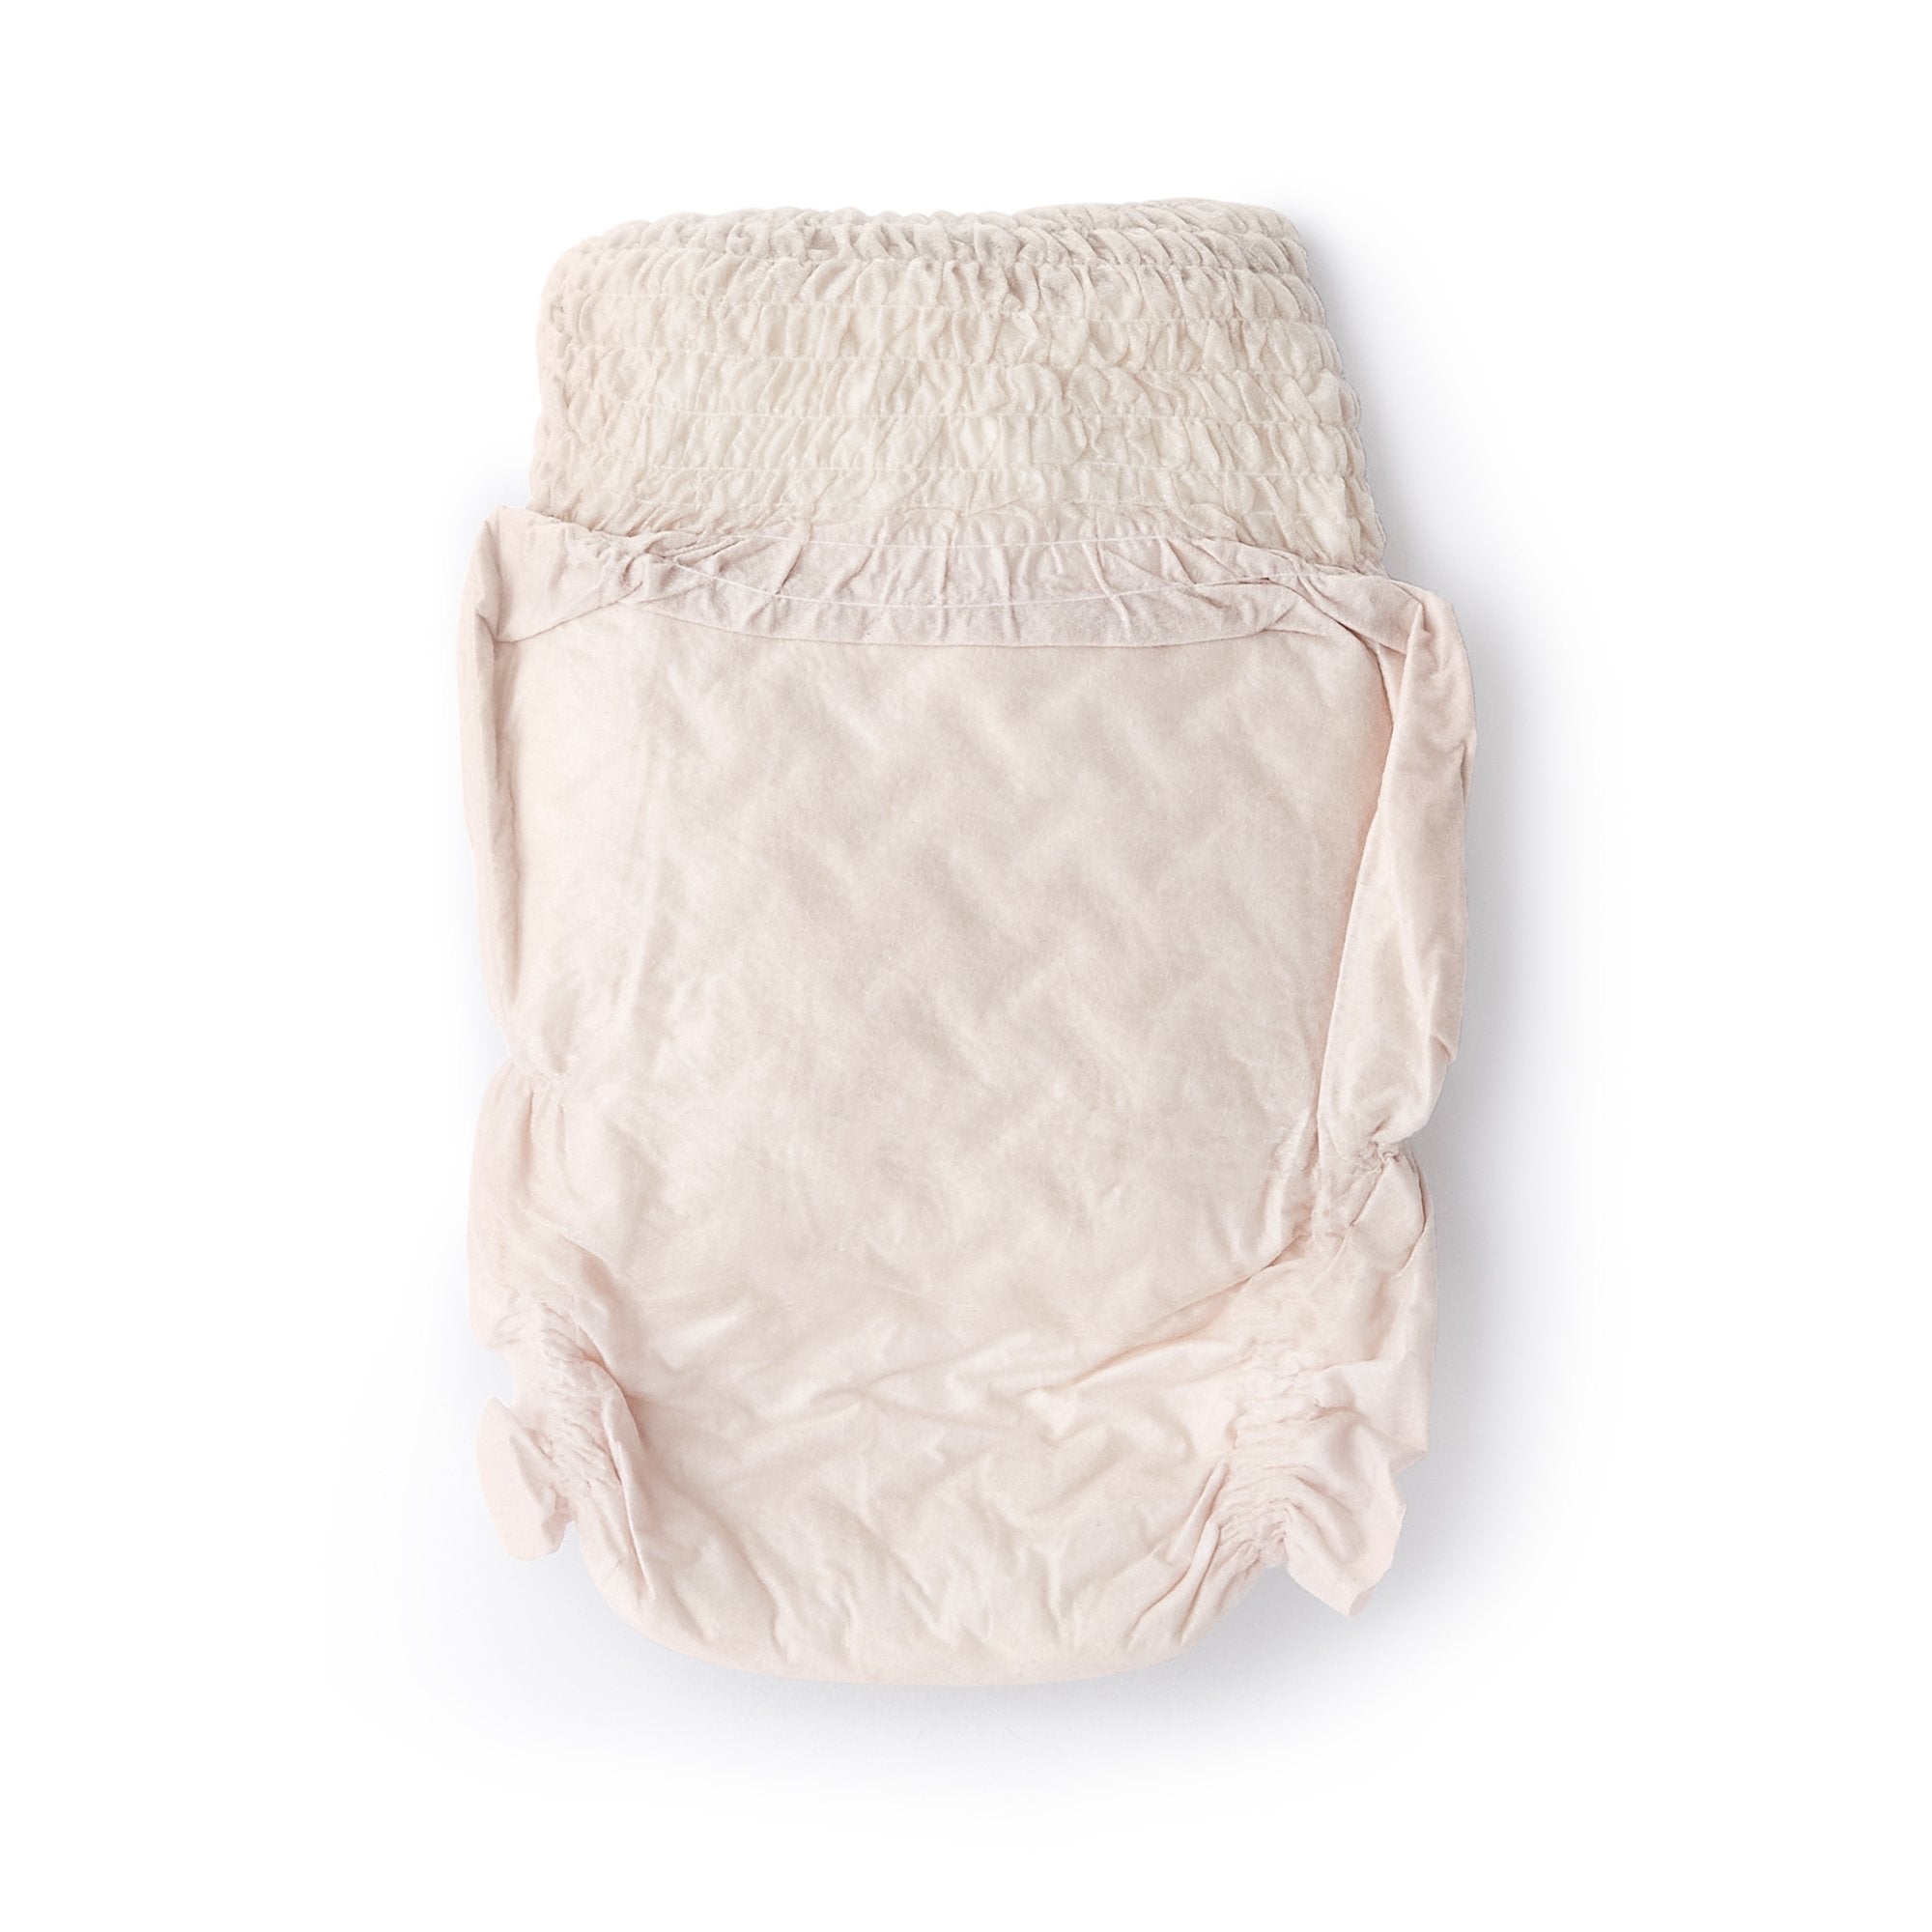 Depend FIT-FLEX Absorbent Underwear XL, Tan, Comfort Fit - 30 Pack